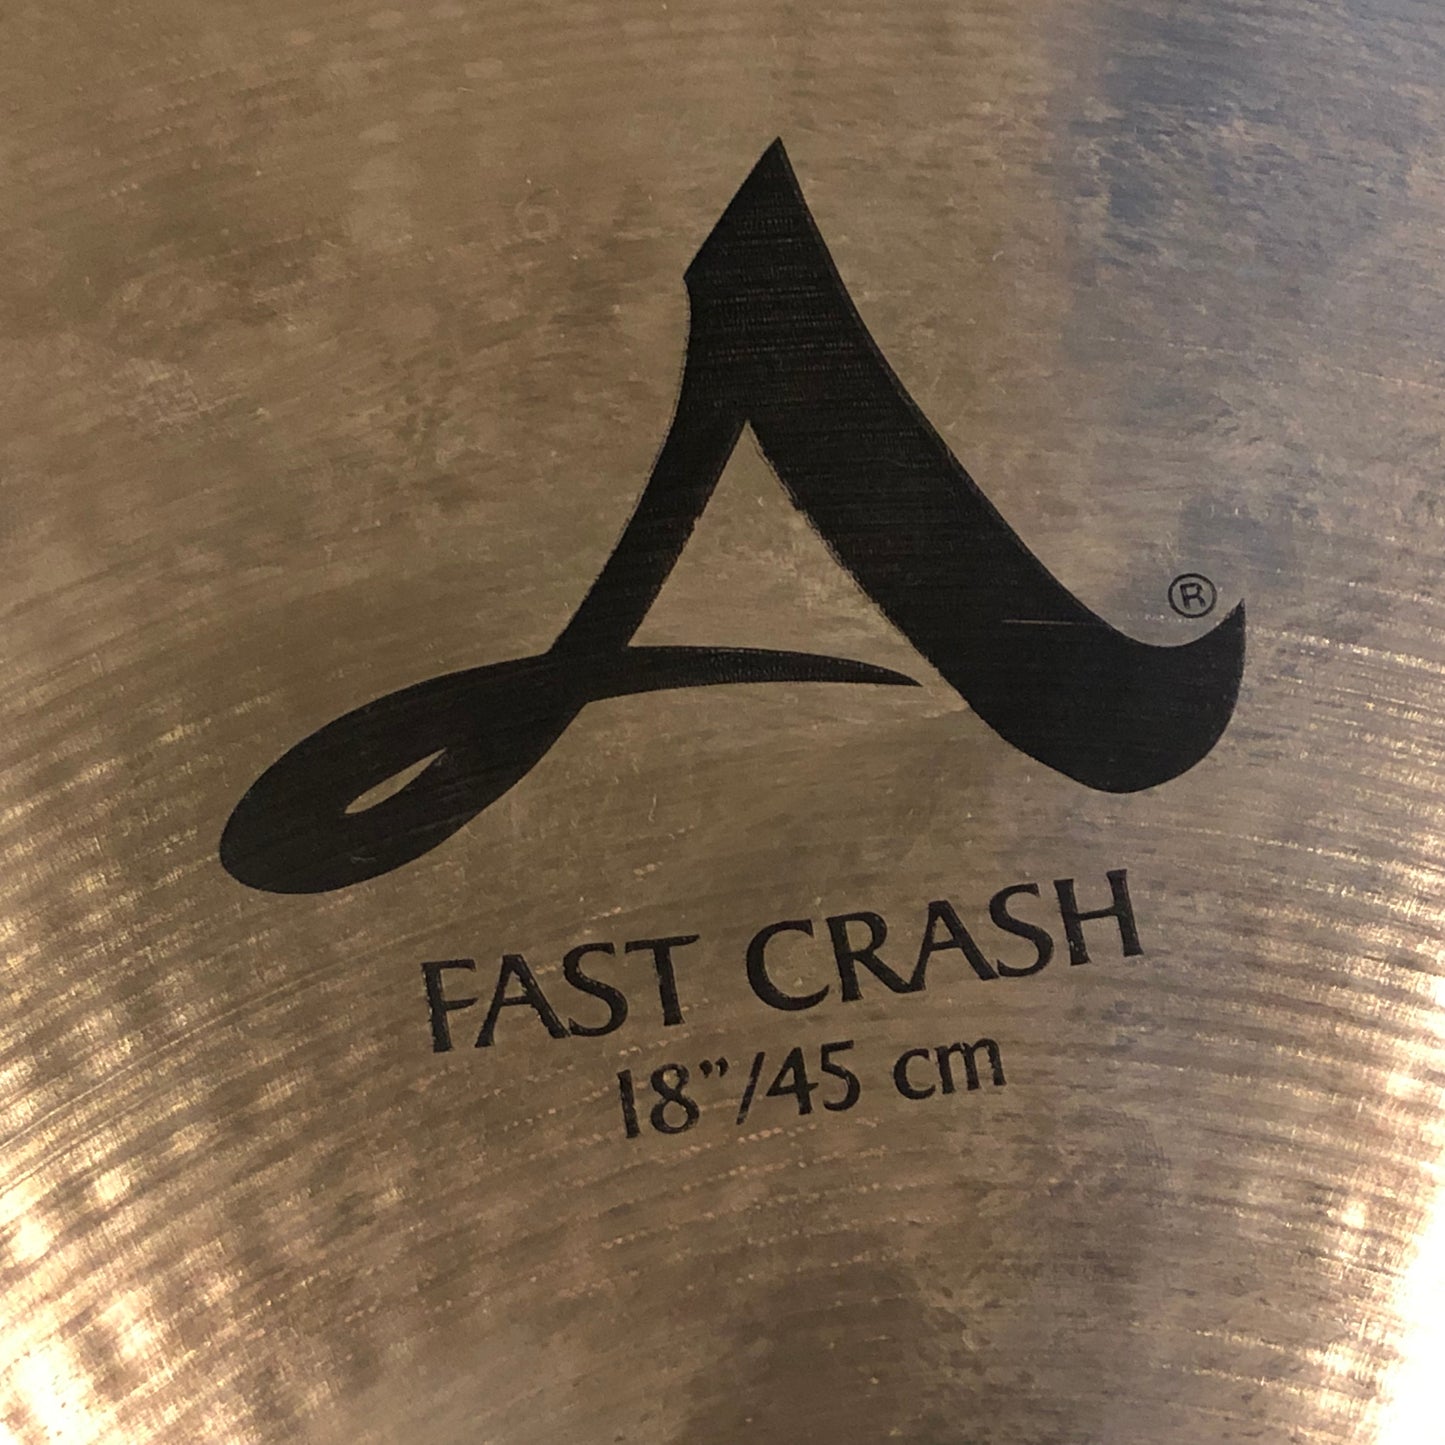 18" Zildjian A Fast Crash Cymbal 1194g A0268